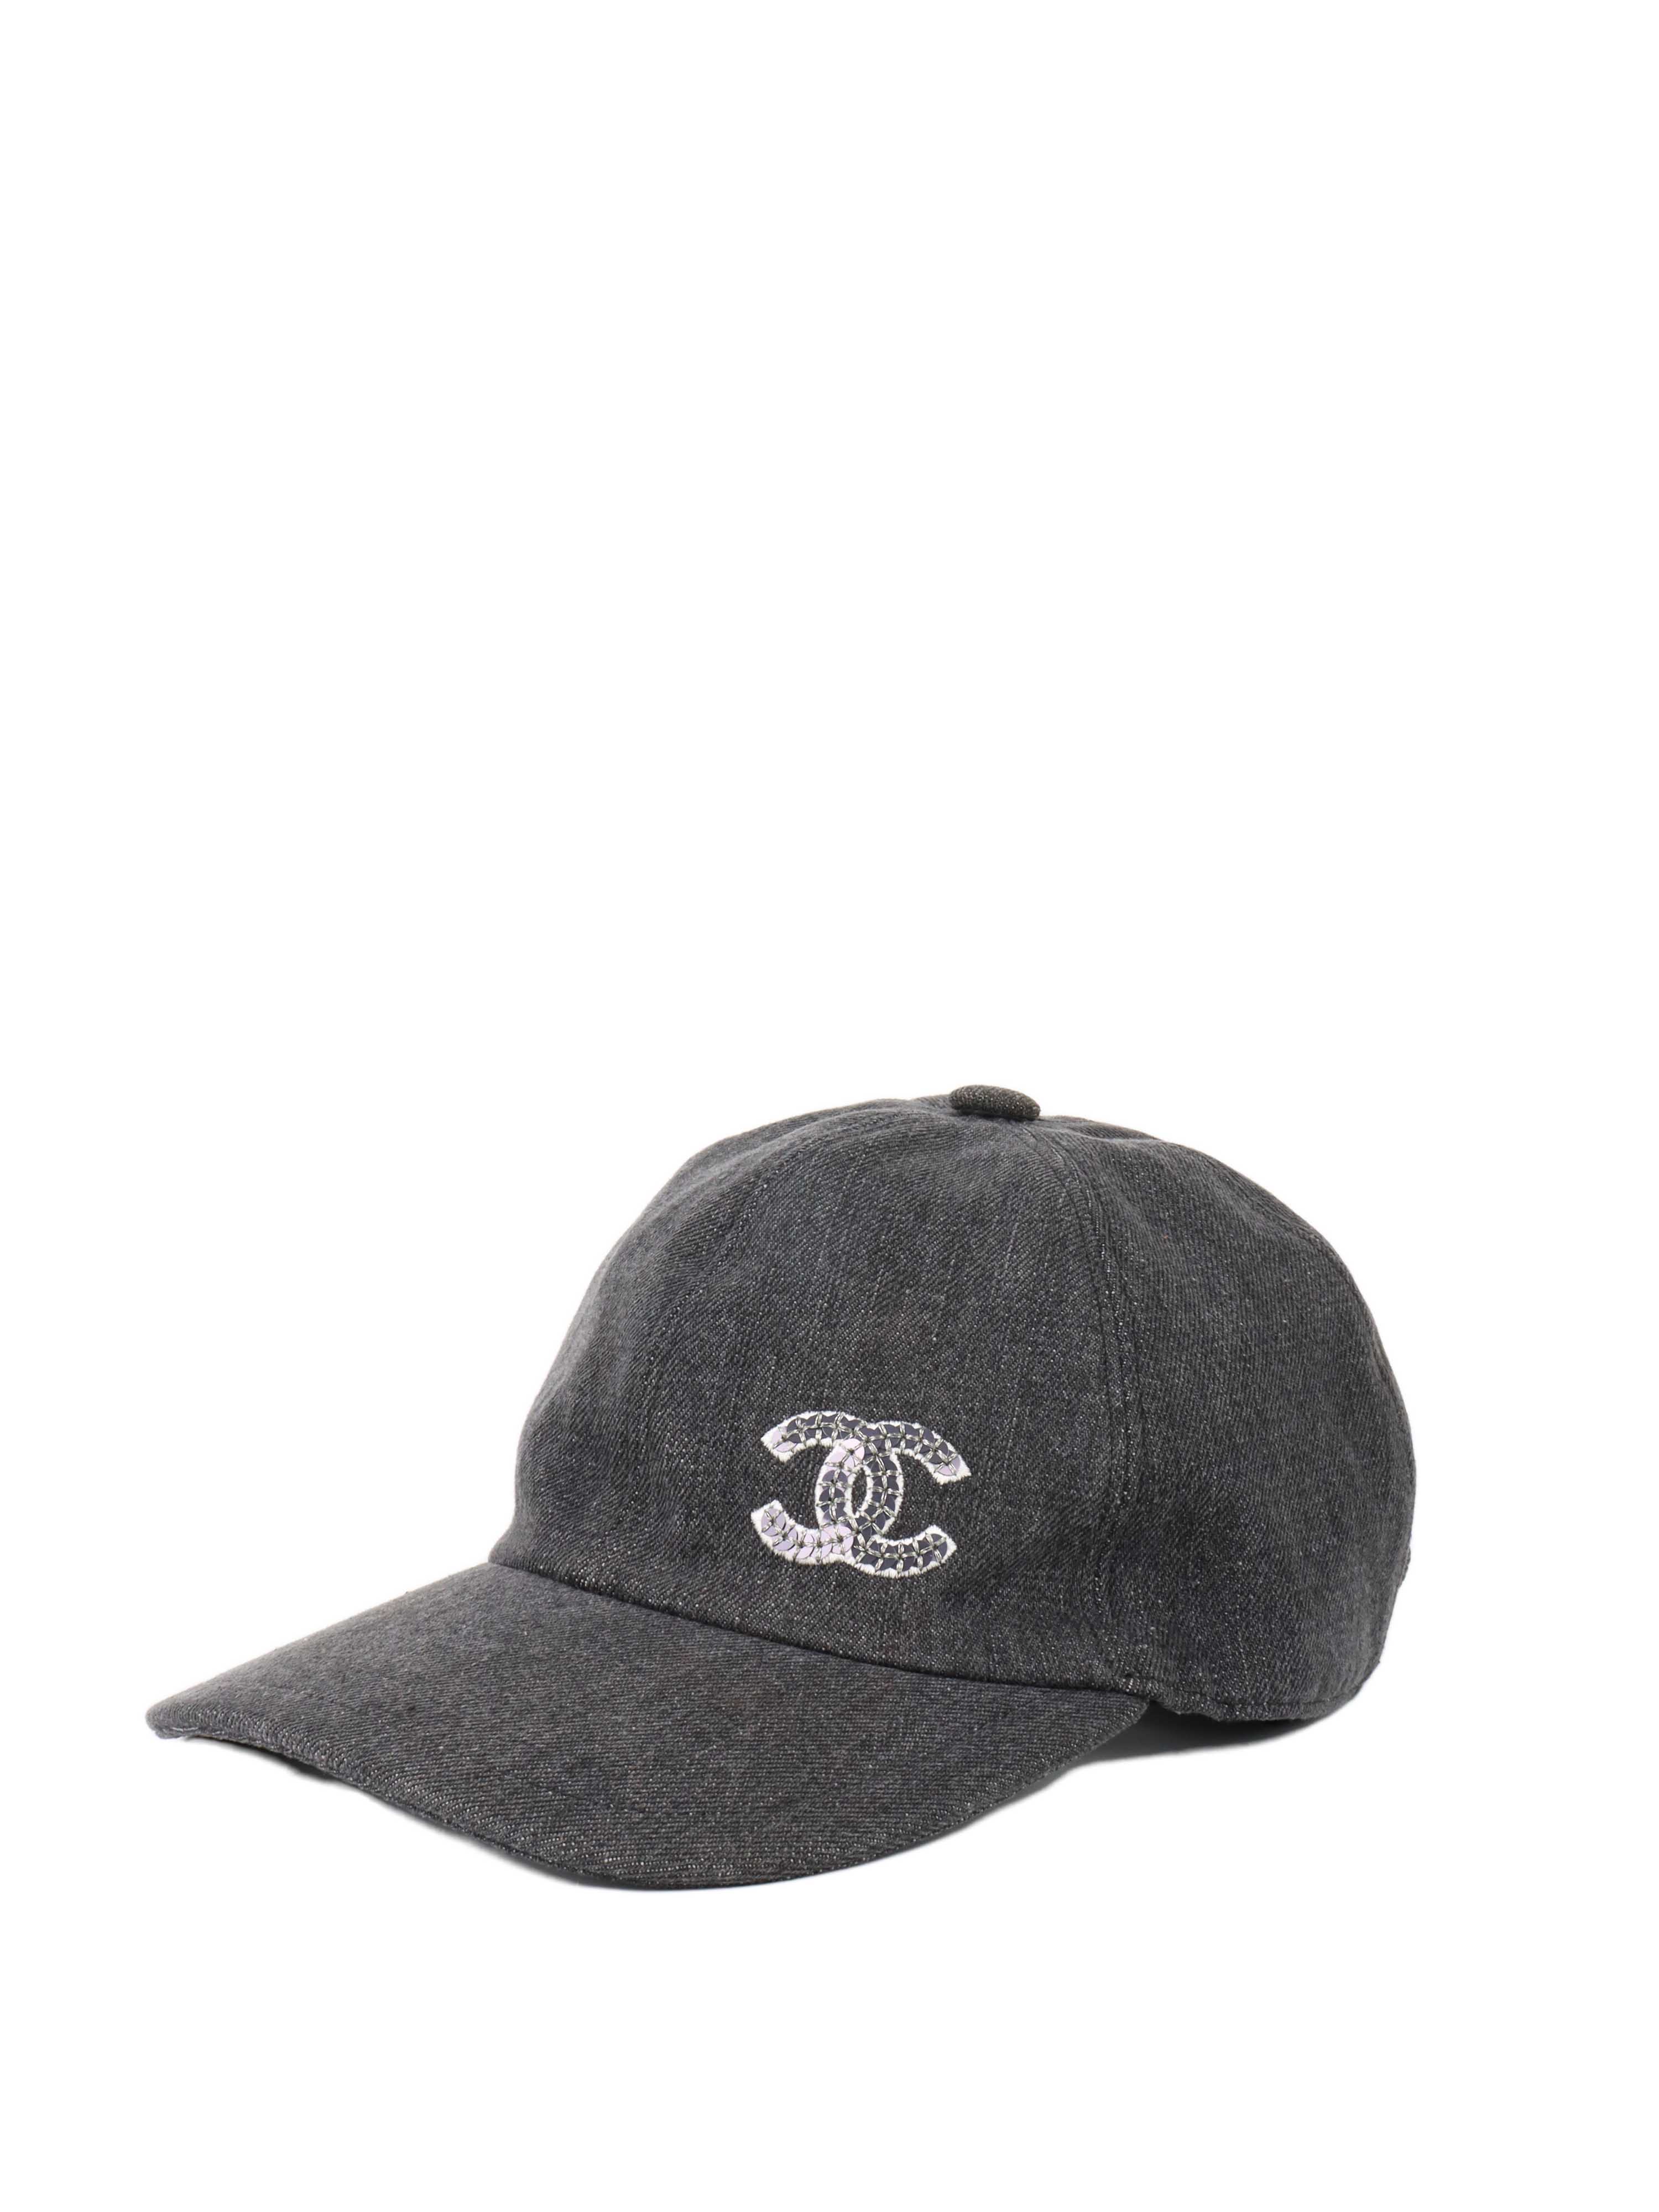 Chanel Grey Cap with CC Logo.